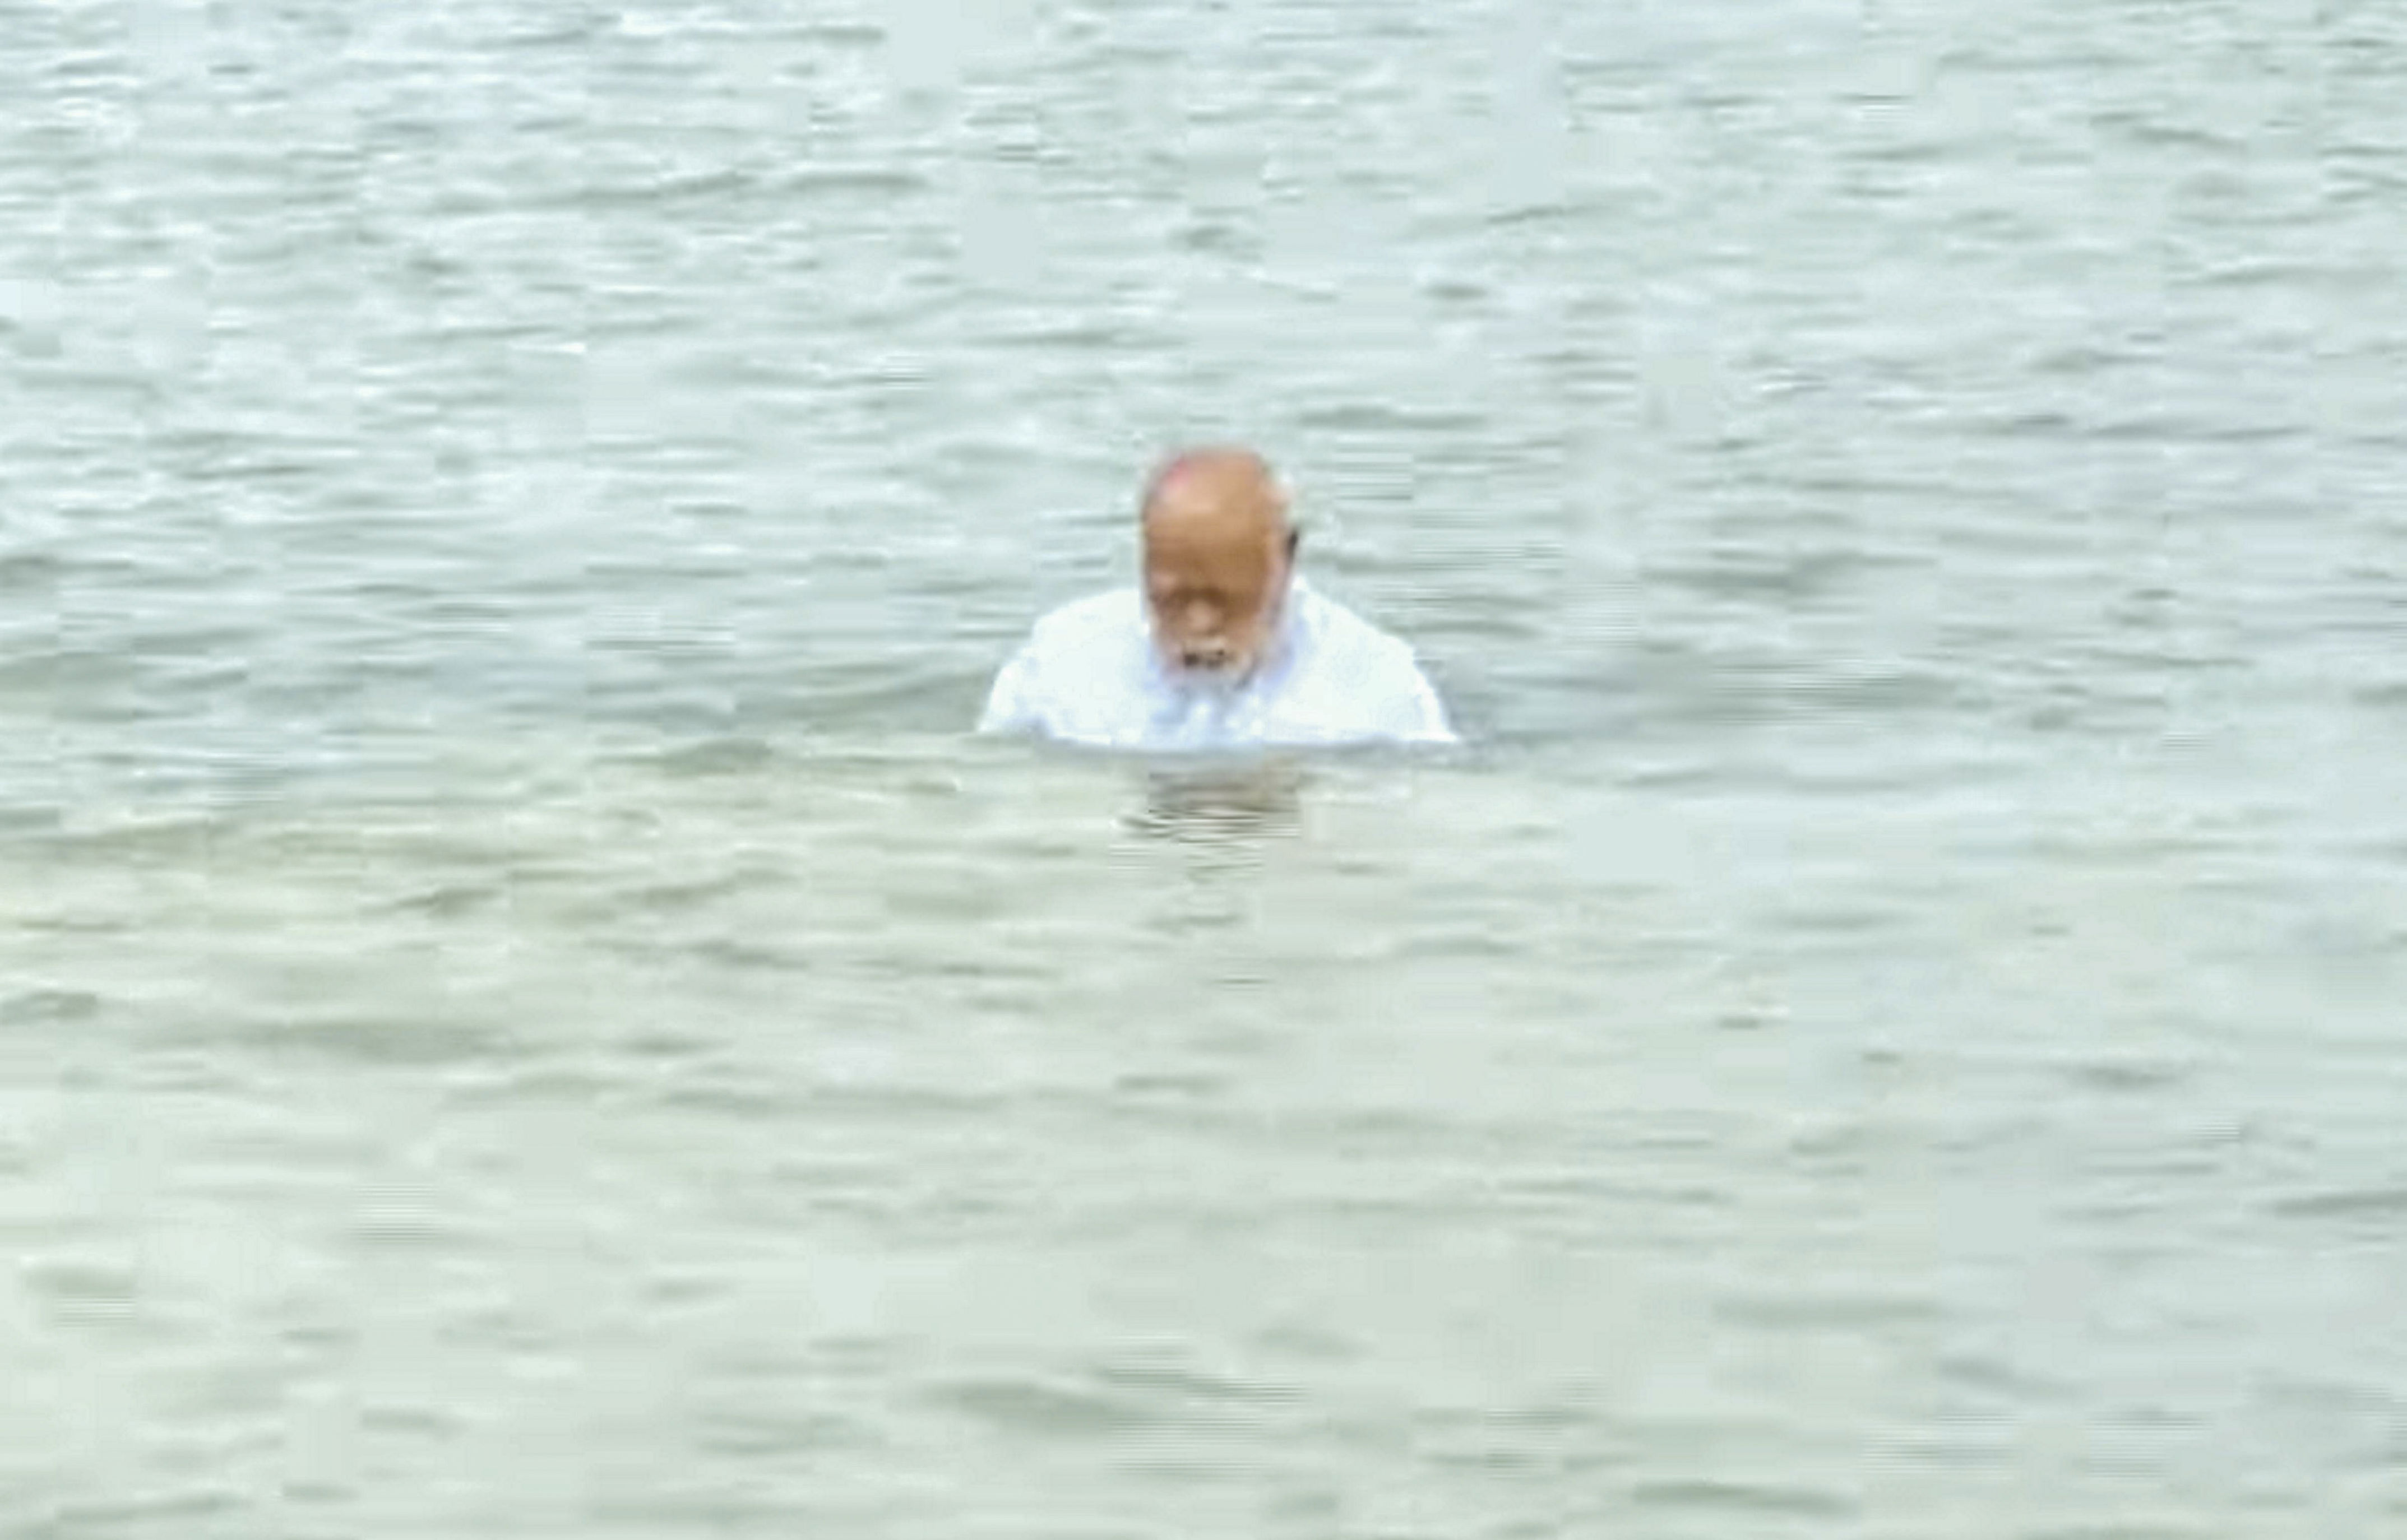 pm modi takes holy dip in 'agni theerth' beach; prays at rameswaram temple